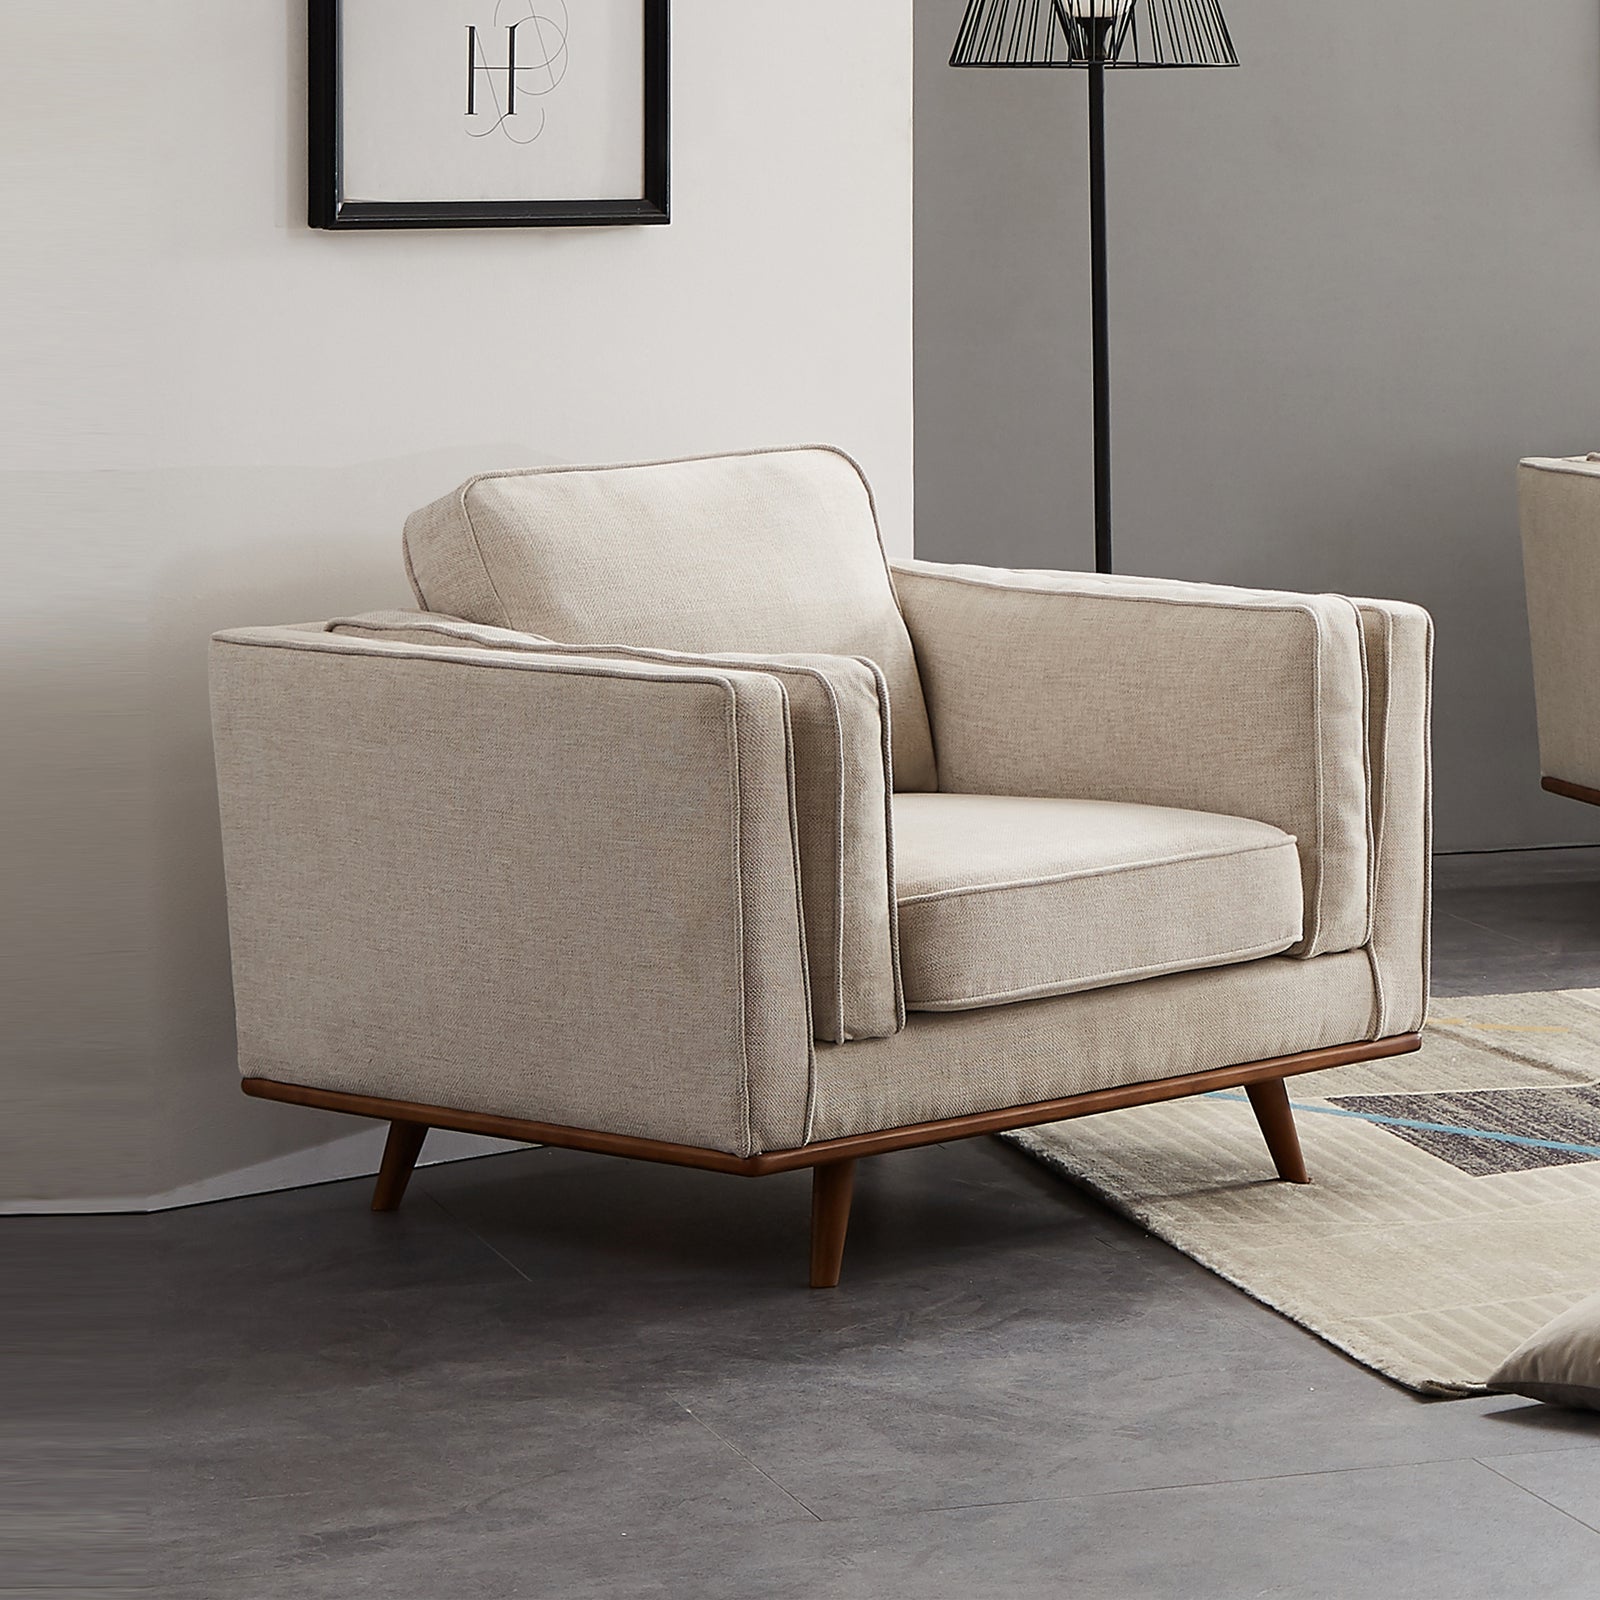 York 1 Seater Fabric Armchair Sofa Modern Lounge in Beige Colour